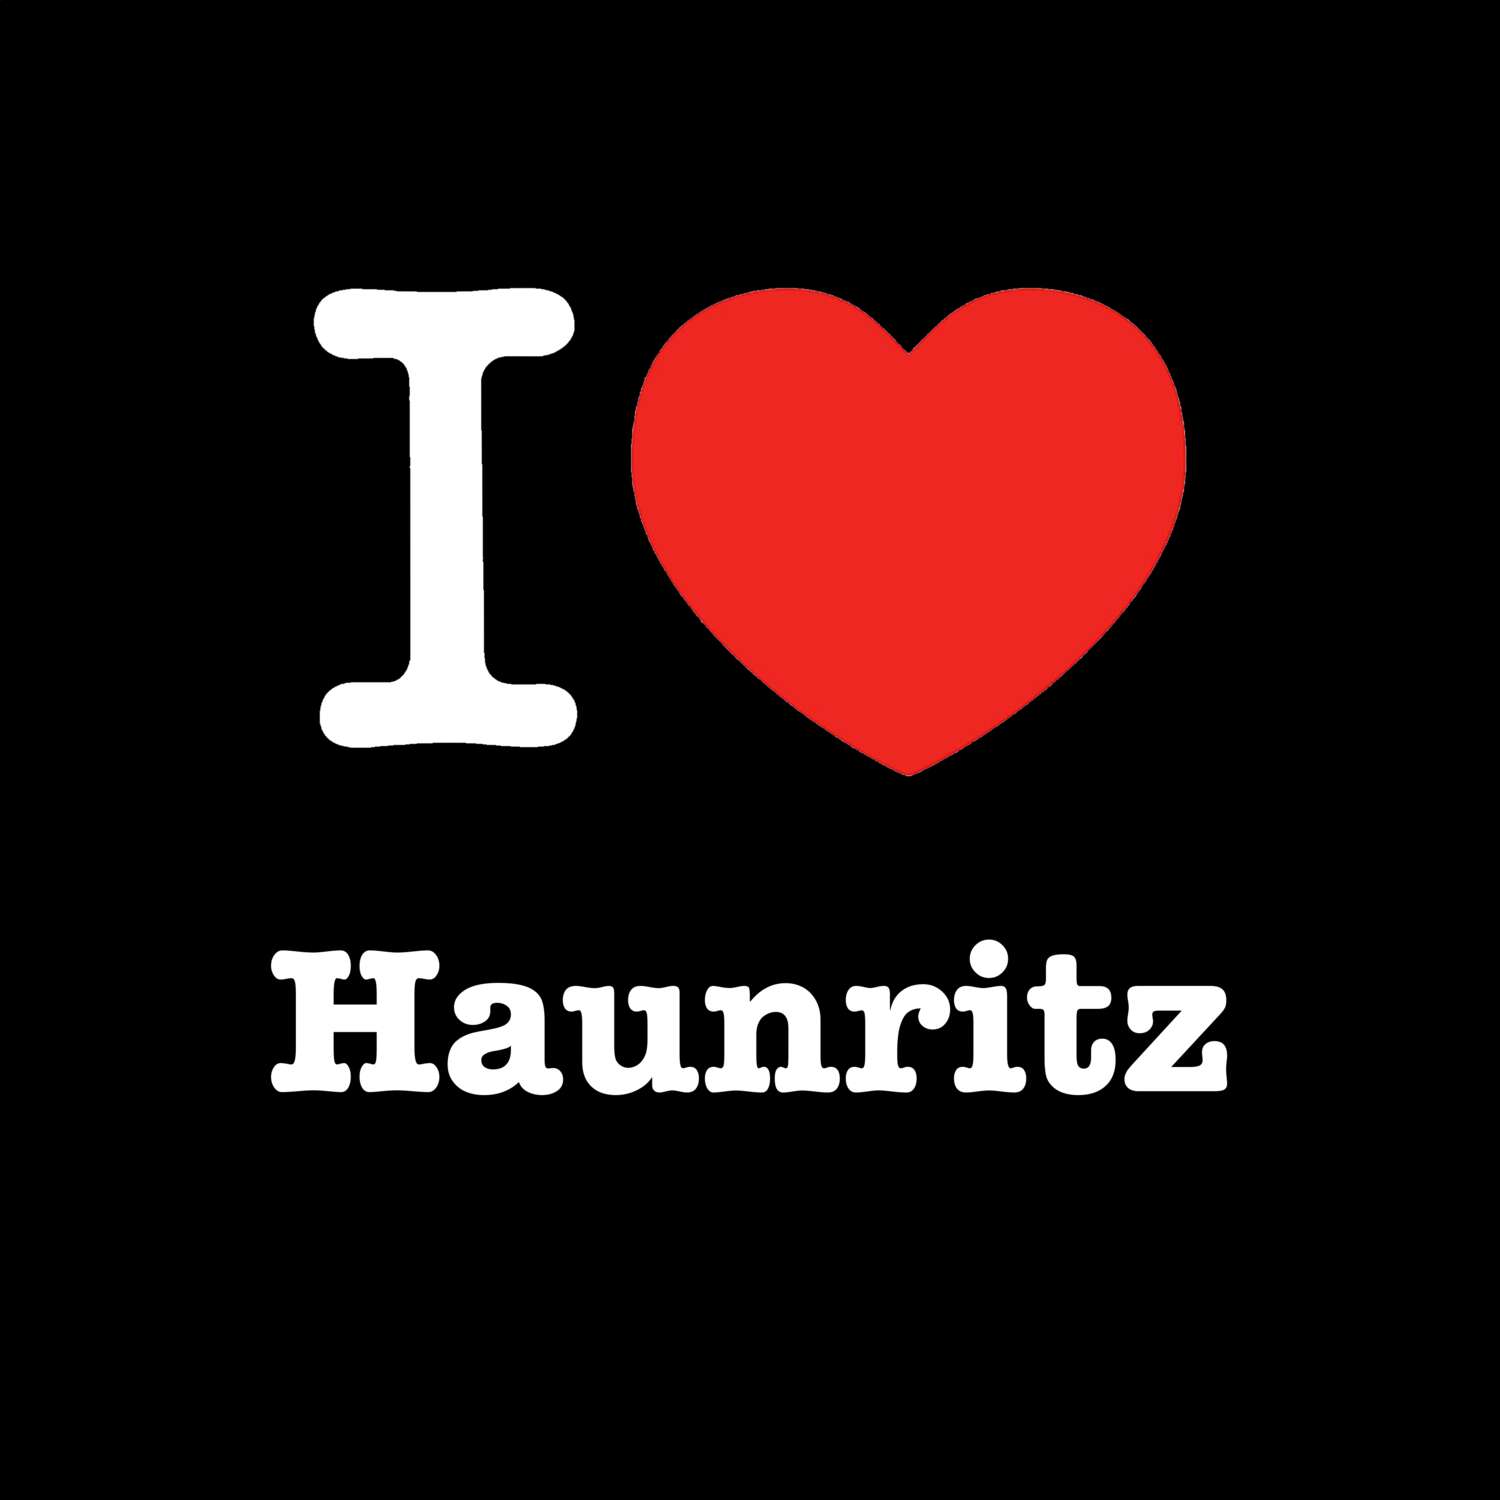 Haunritz T-Shirt »I love«